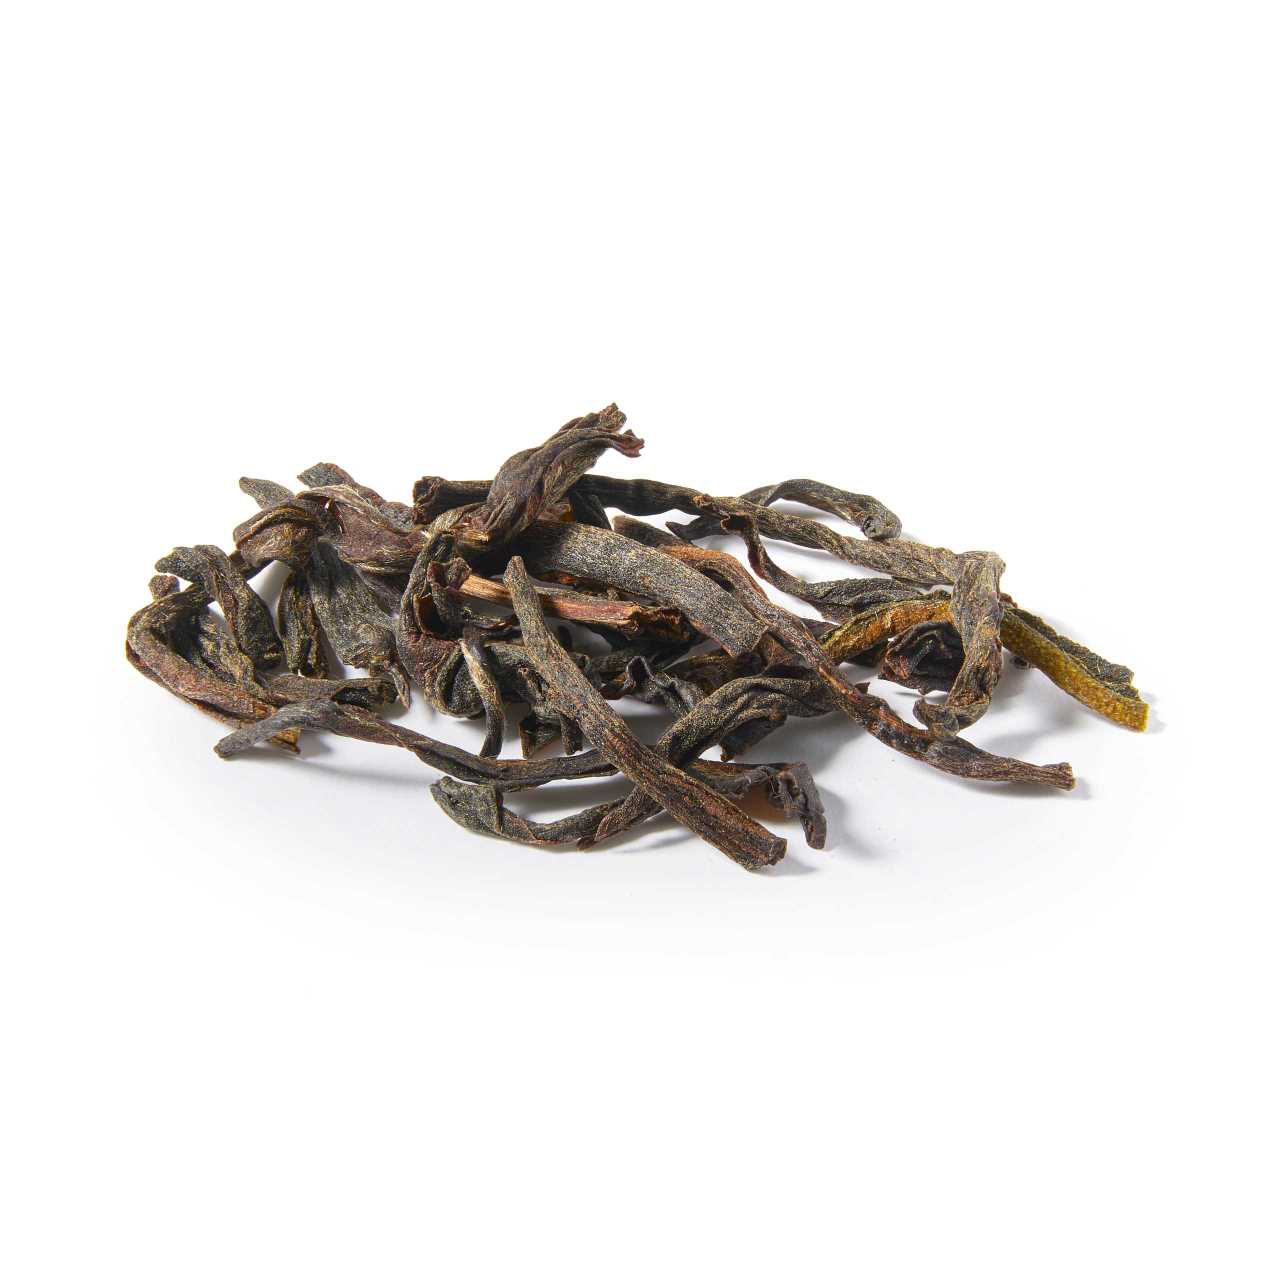 A macro pile of Margaret's Hope Darjeeling Second Flush Loose Leaf Tea